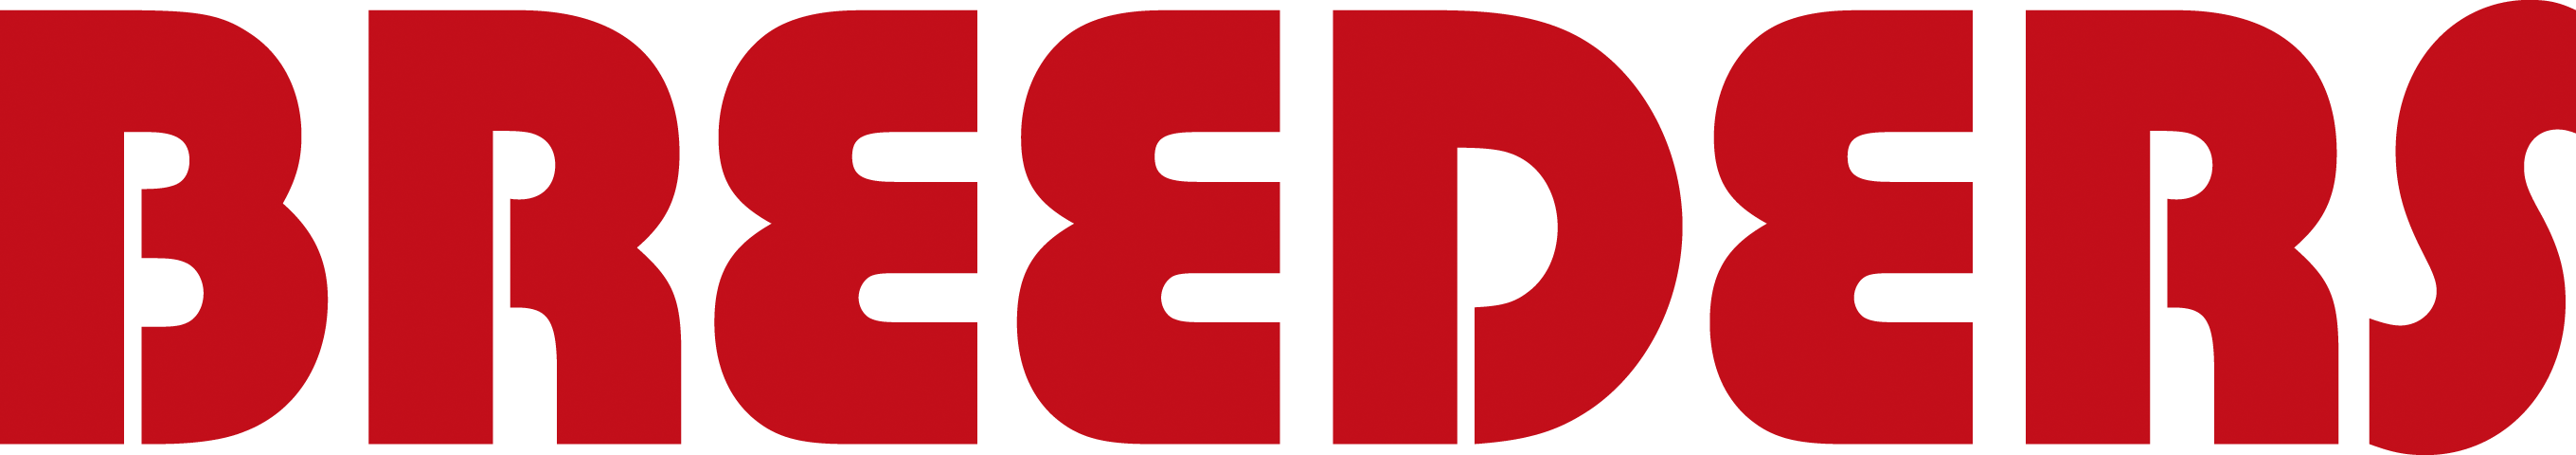 Breeders Logo - mørk rød